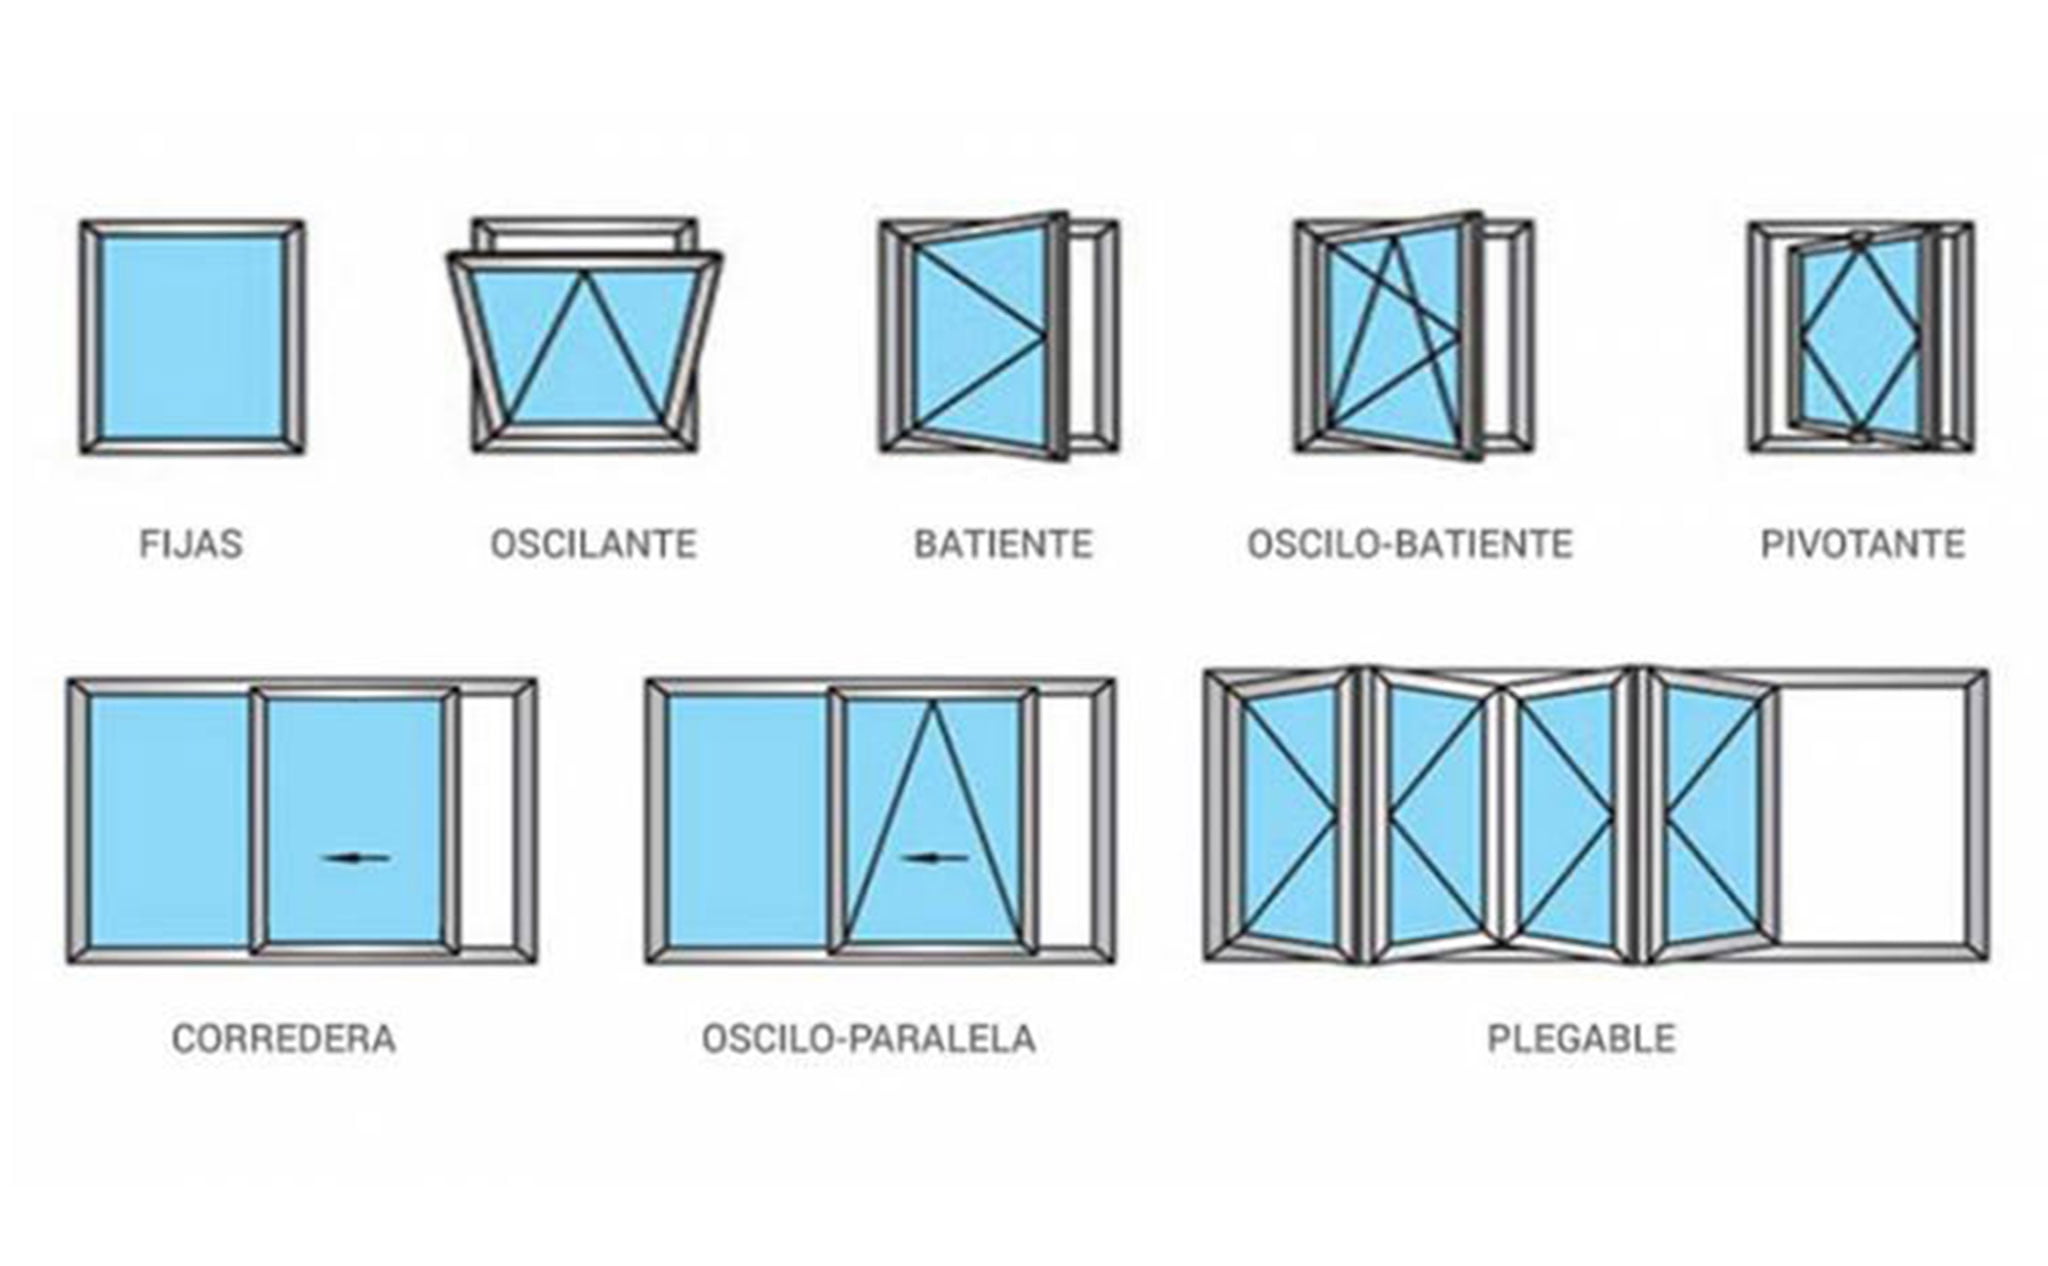 Janela - tipos de aberturas  Janelas, Tipos de janelas, Arquitetura